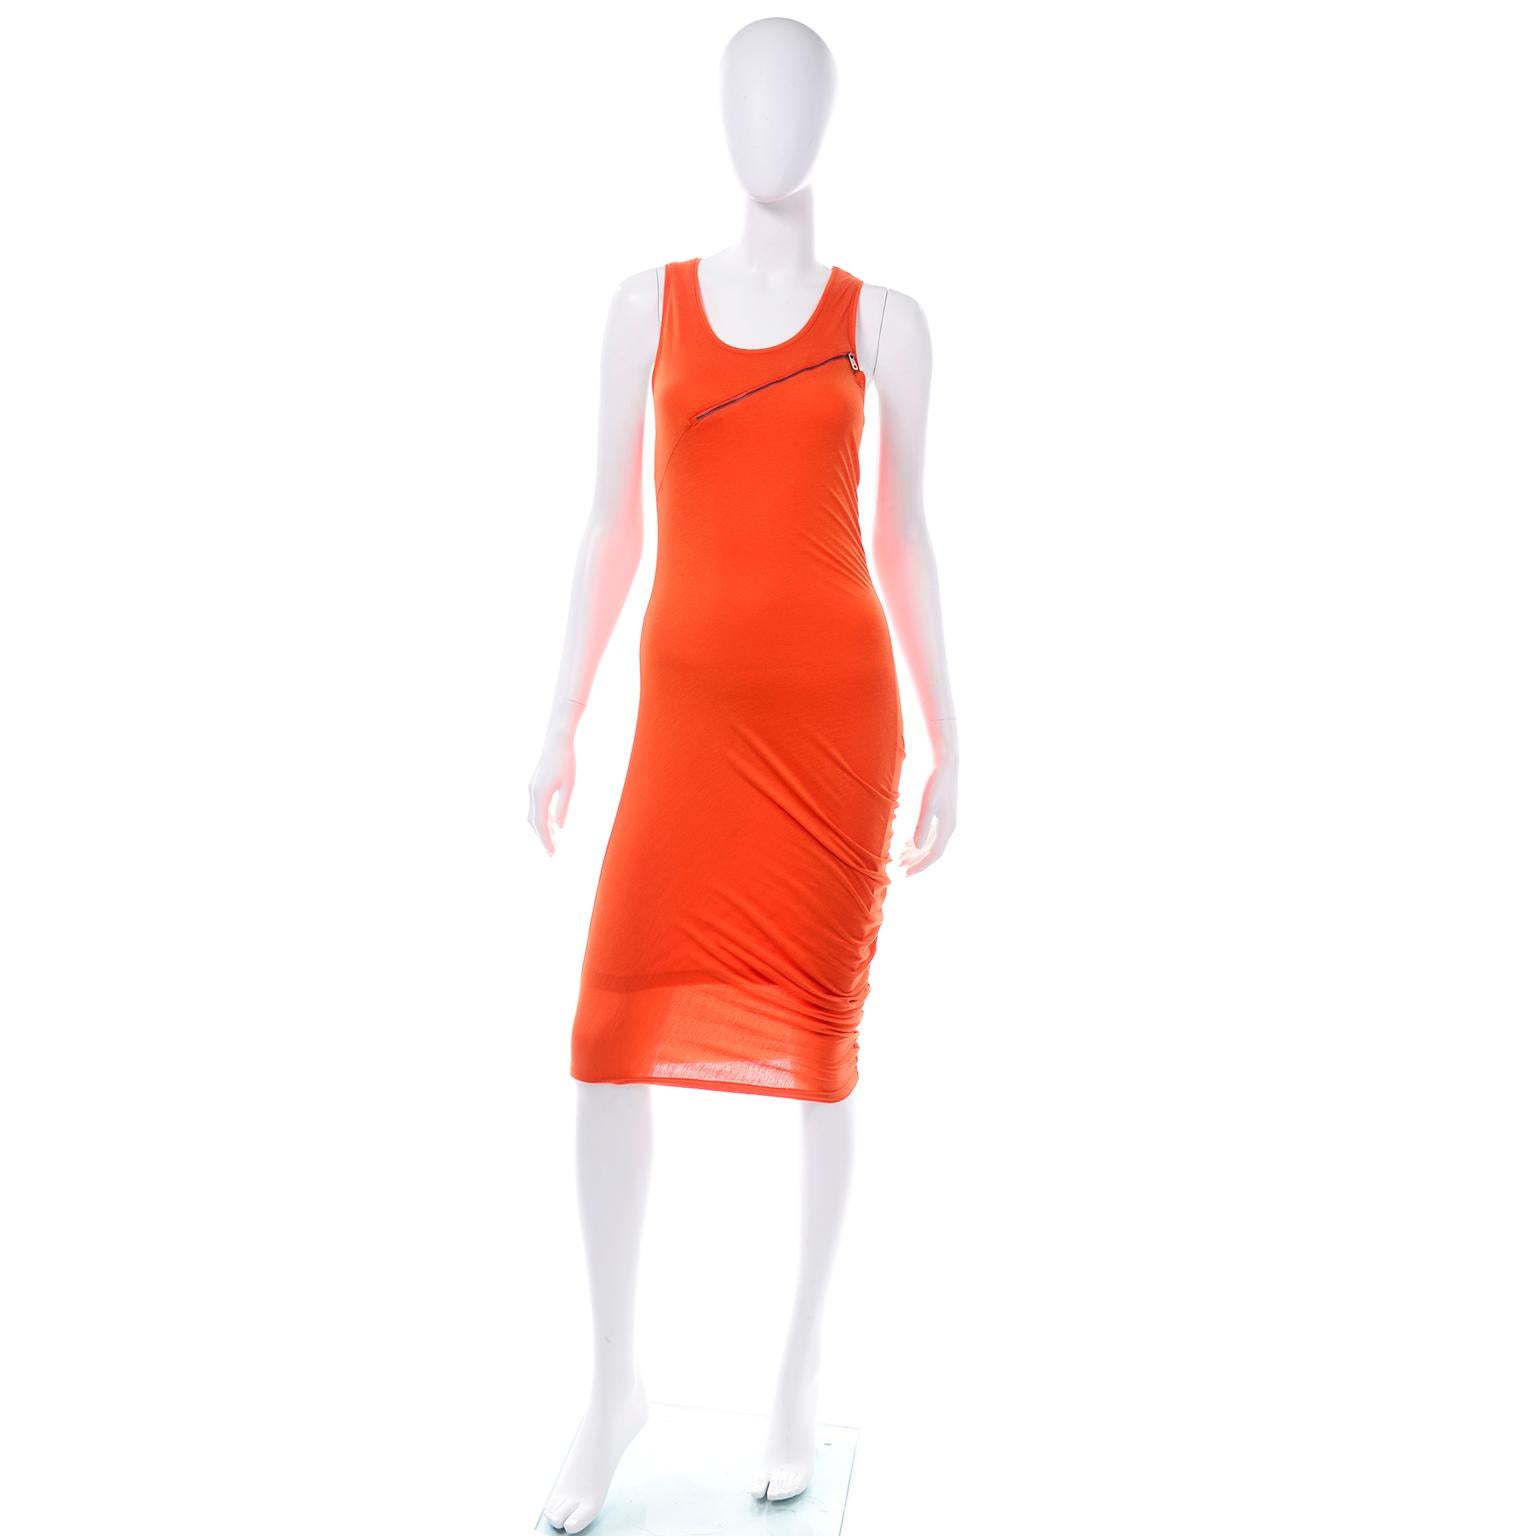 McQ Alexander McQueen Orange Stretch Knit Dress W Cut Out Zipper Details